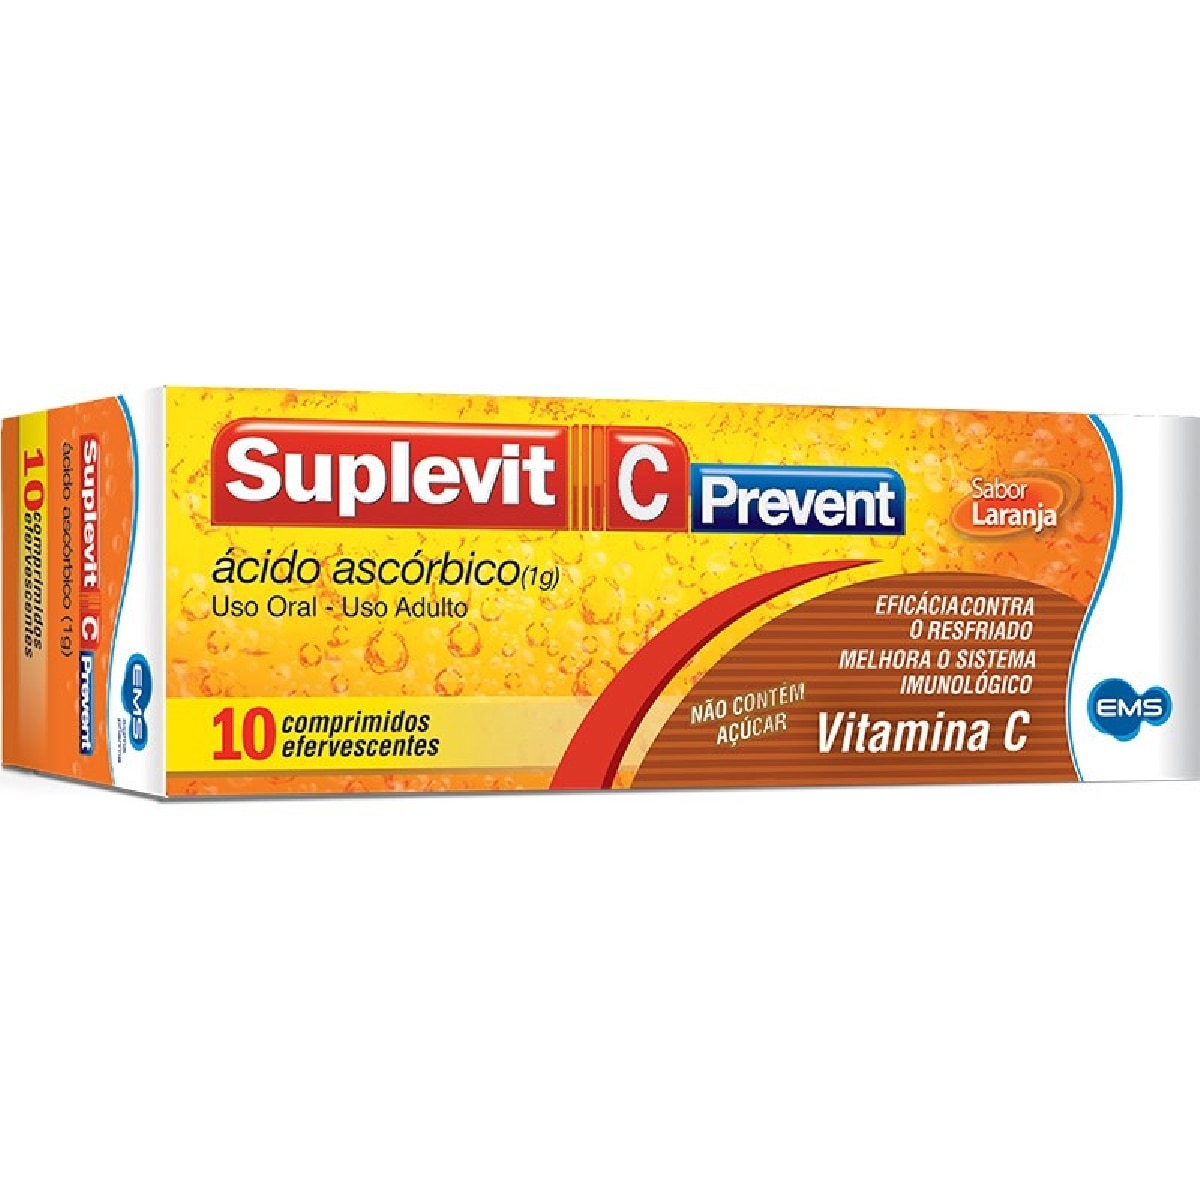 Suplevit C Prevent 1g Sabor laranja 10 Comprimidos Efervescentes